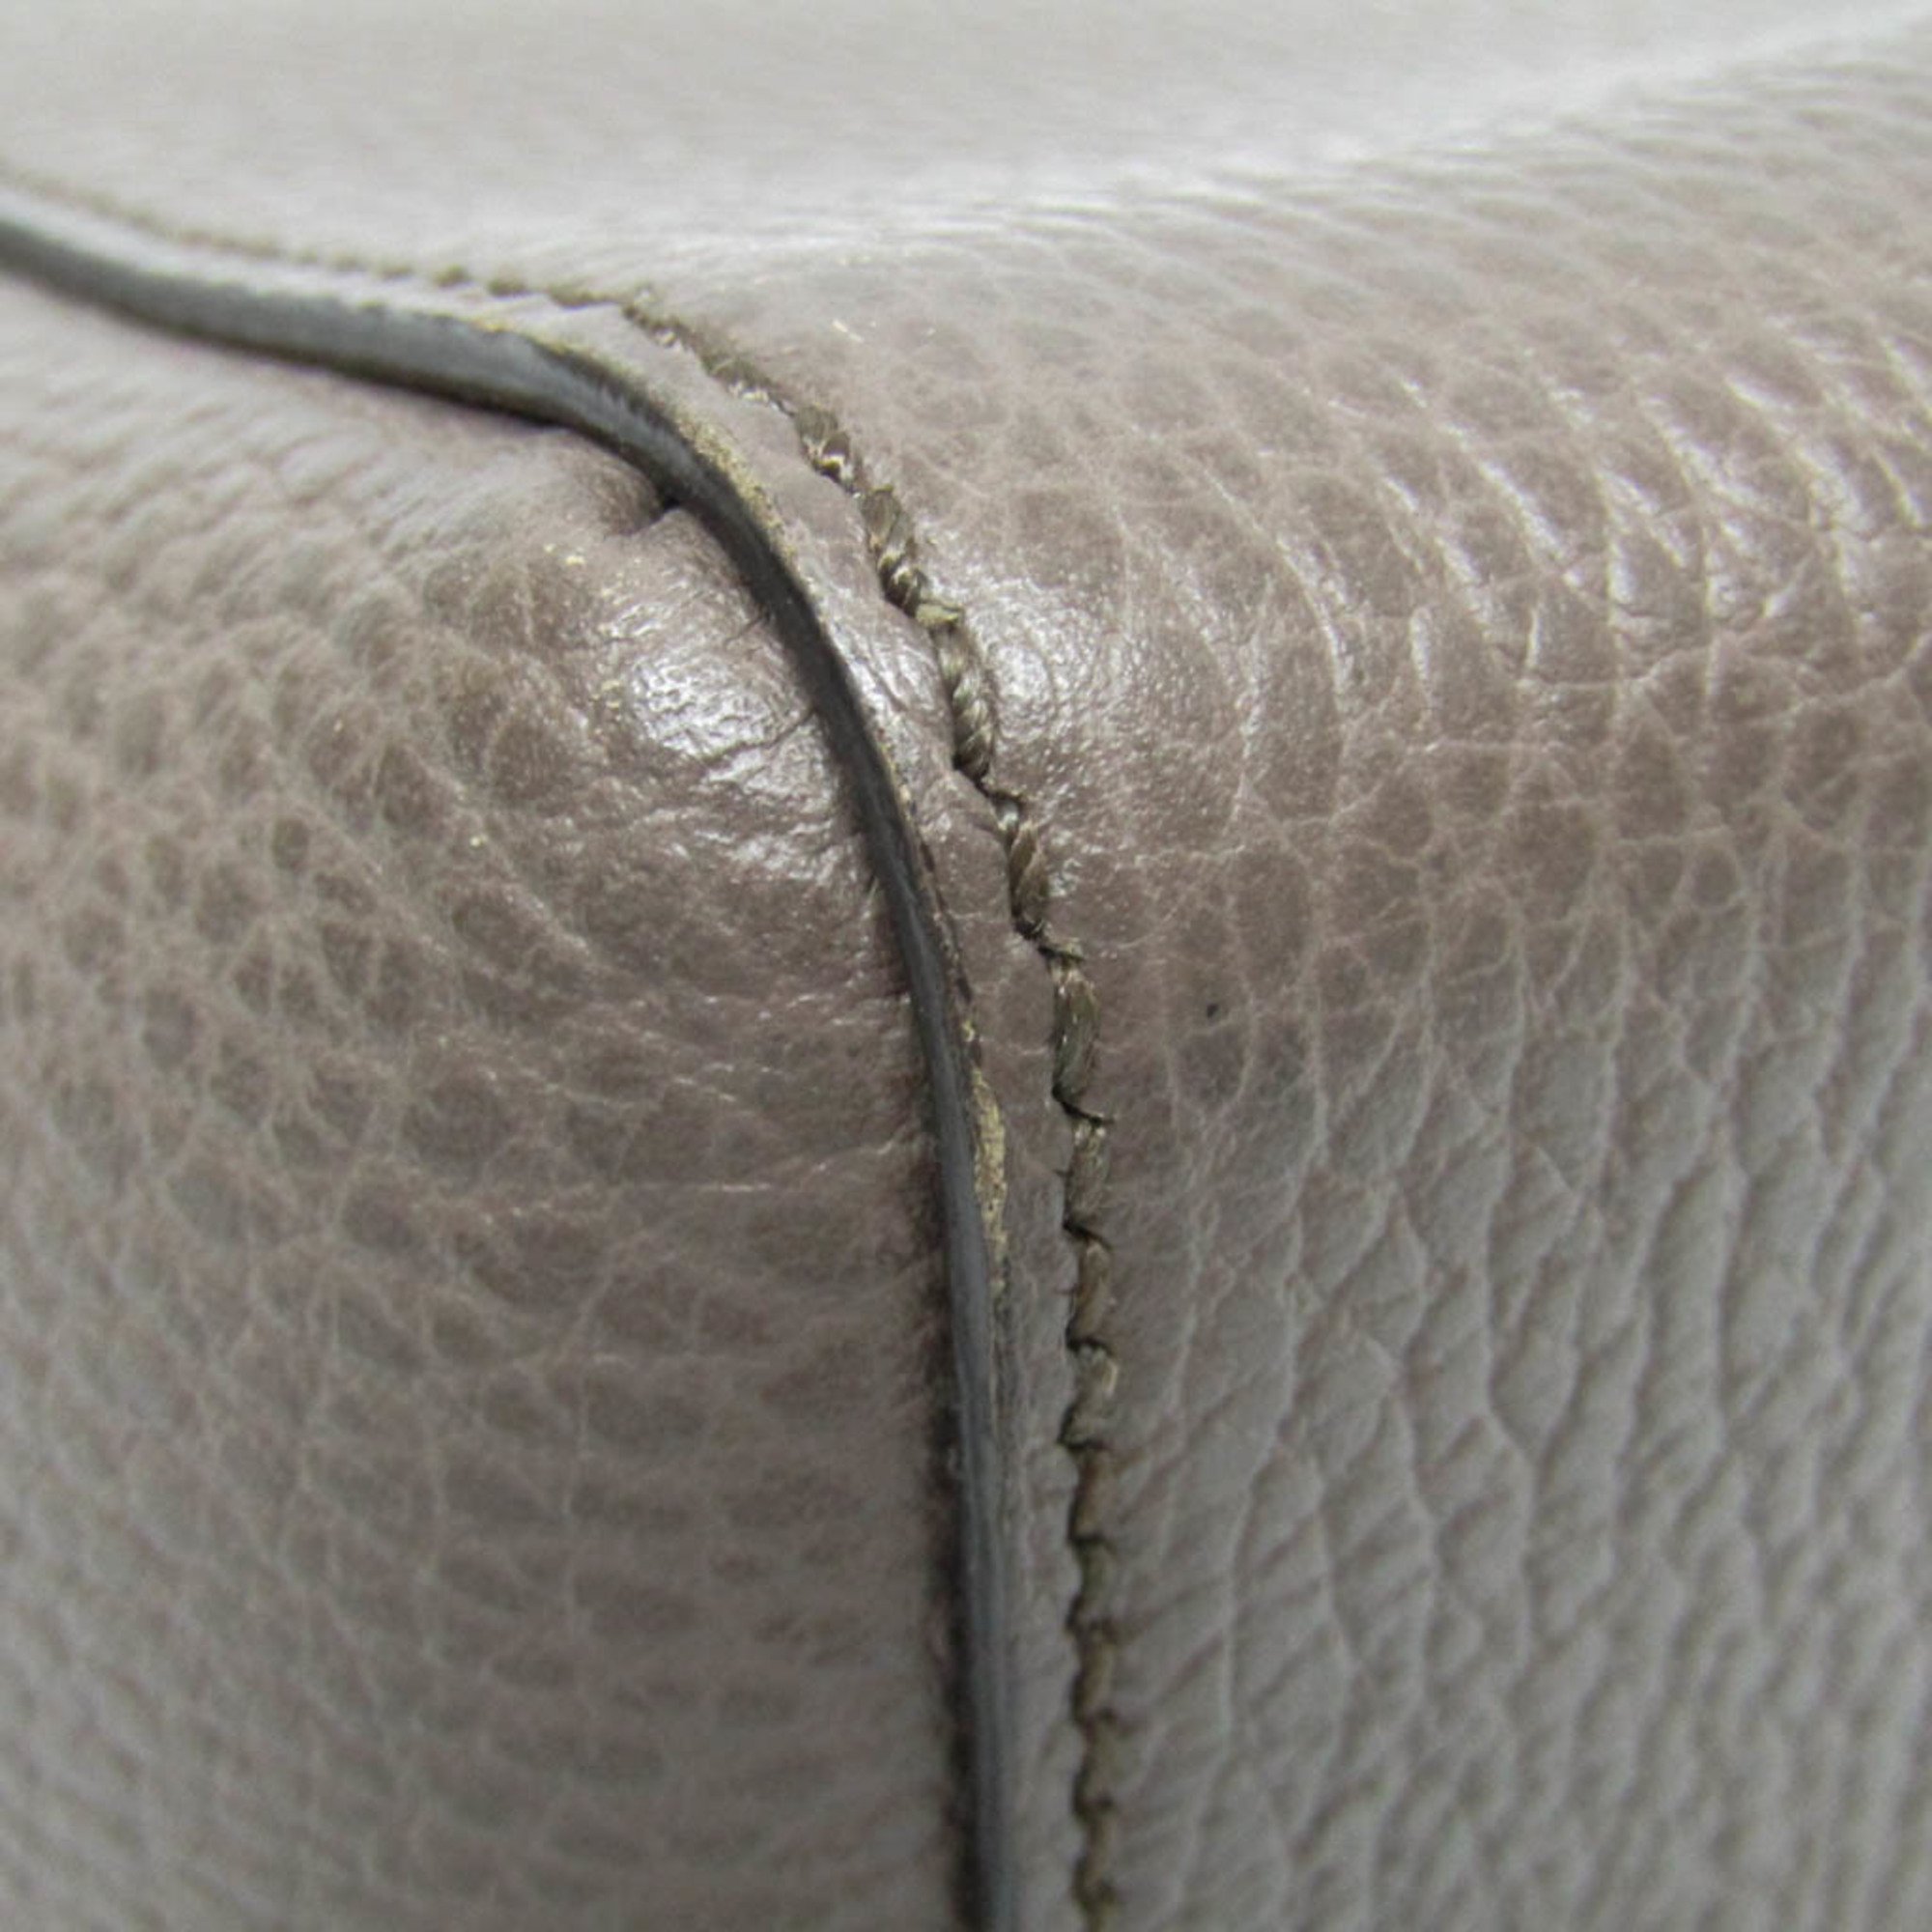 Gucci Gucci Swing 354408 Women's Leather Tote Bag Grayish,Pink